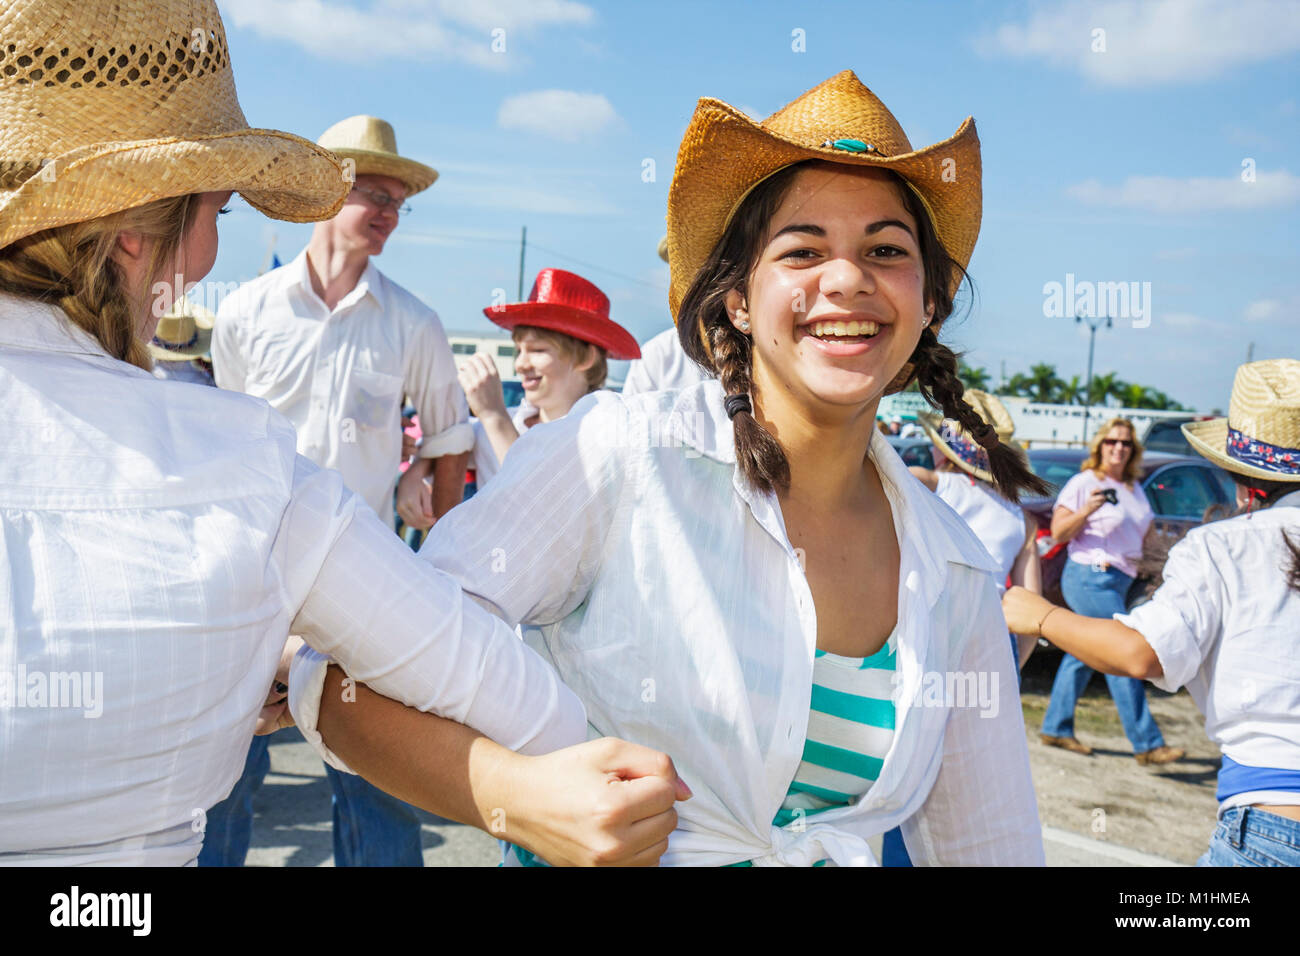 Miami Florida,Homestead,Rodeo Parade,participant,community event,tradition,Hispanic Latin Latino ethnic immigrant immigrants minority,girl girls,young Stock Photo